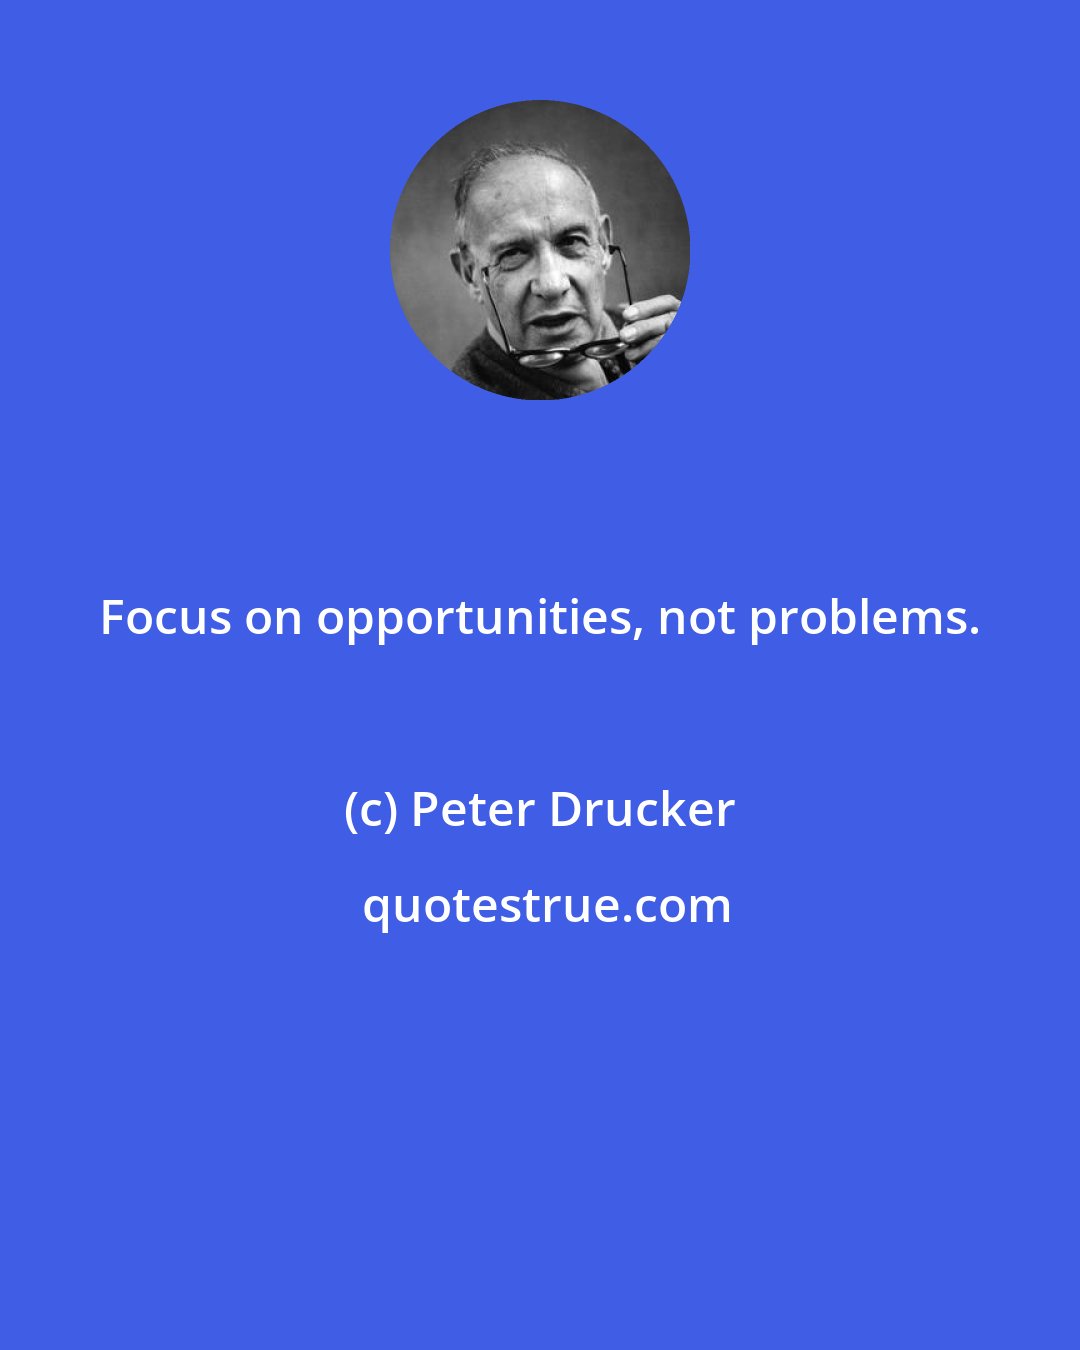 Peter Drucker: Focus on opportunities, not problems.